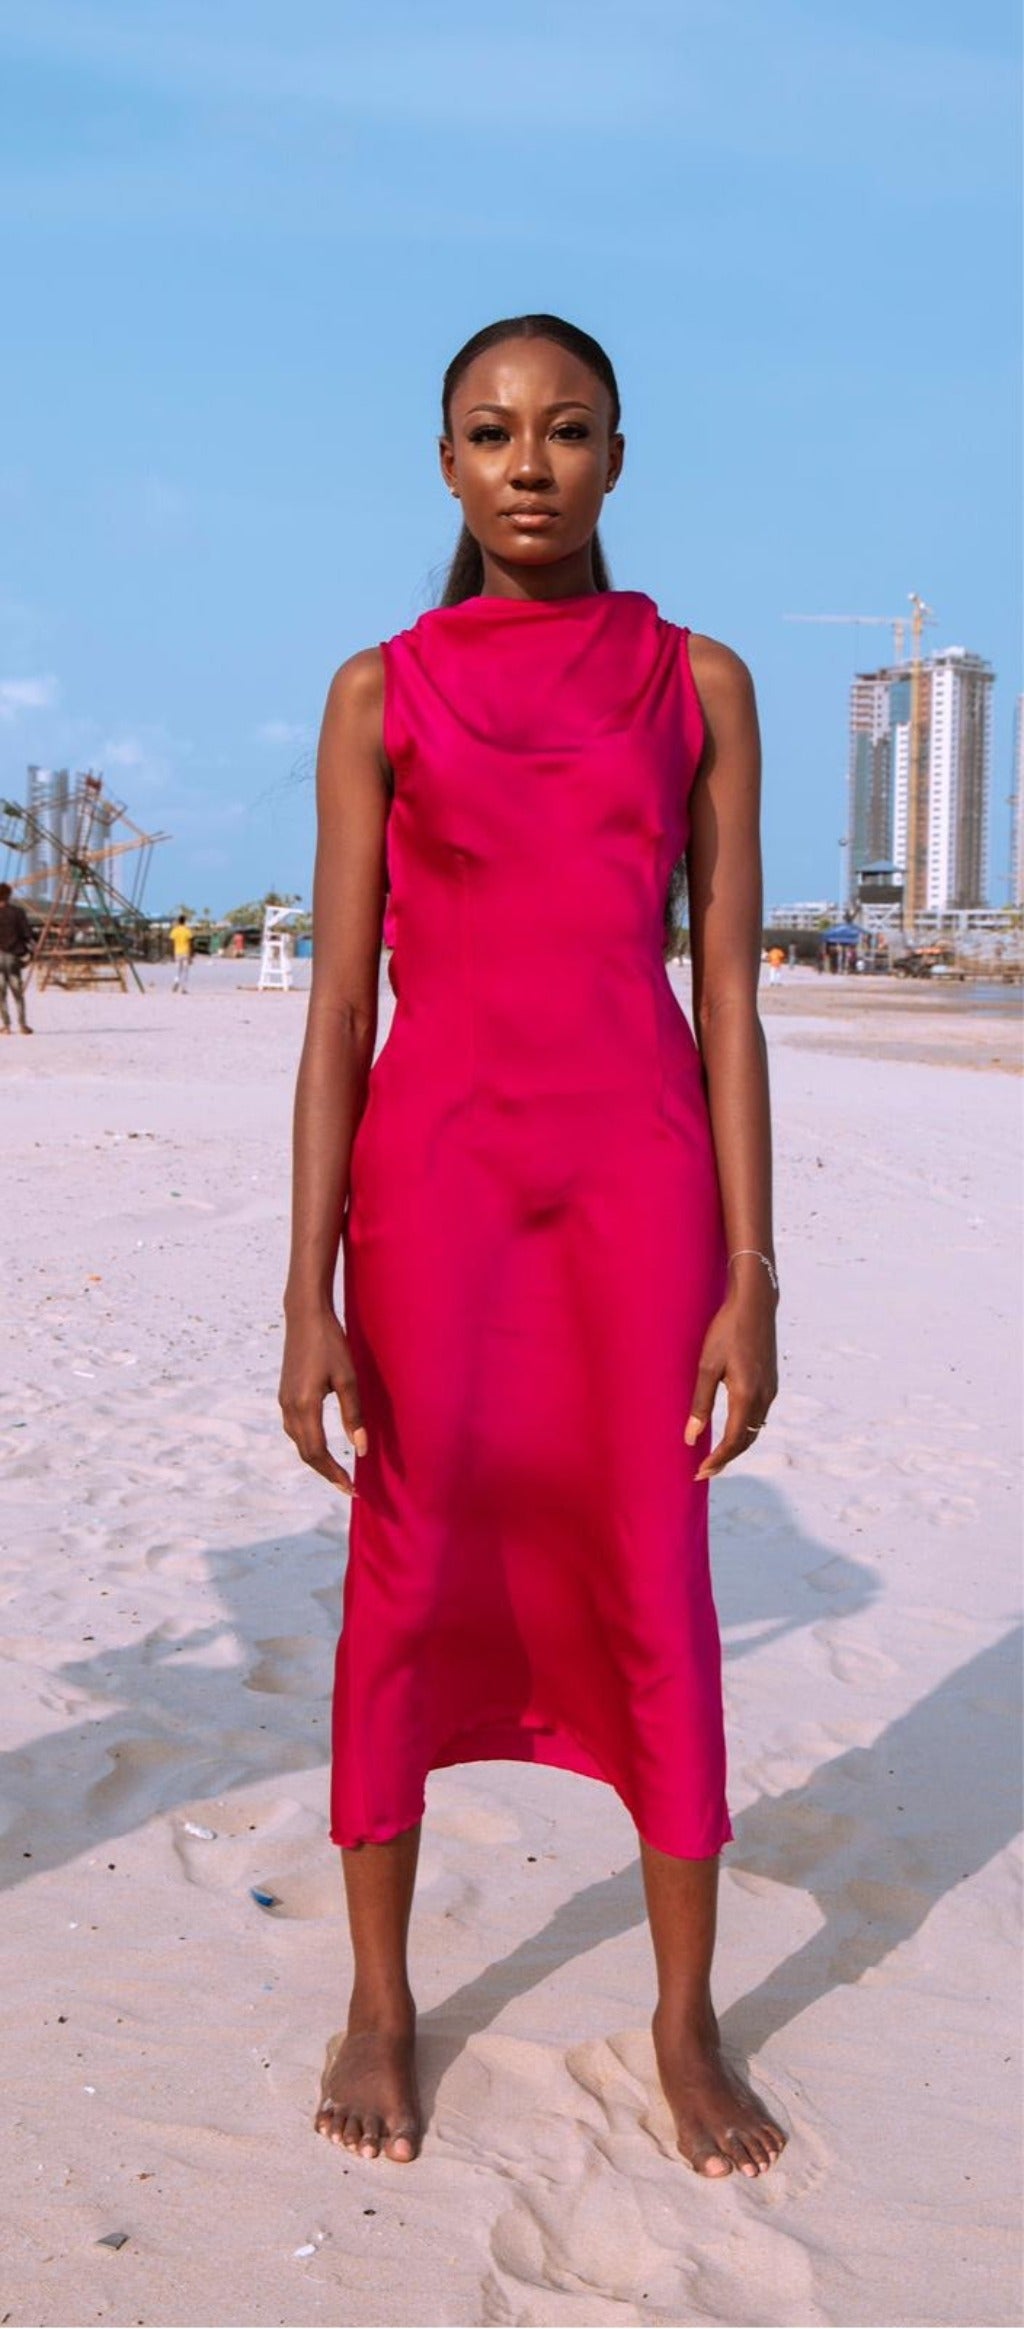 a model wearing a magenta dress on a beach